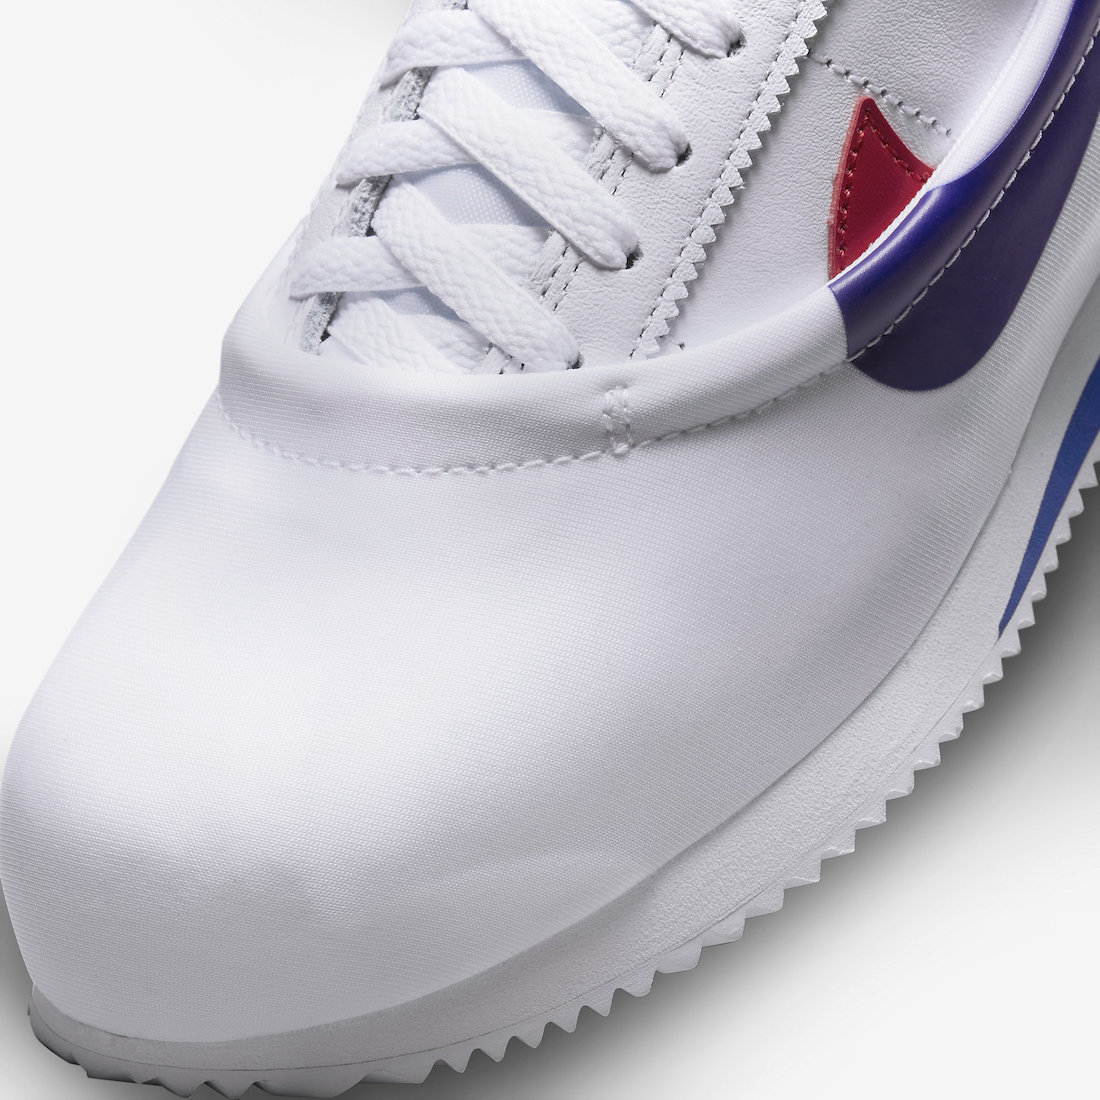 CLOT Nike Cortez Forrest Gump White Blue Red DZ3239 100 Release Date 7